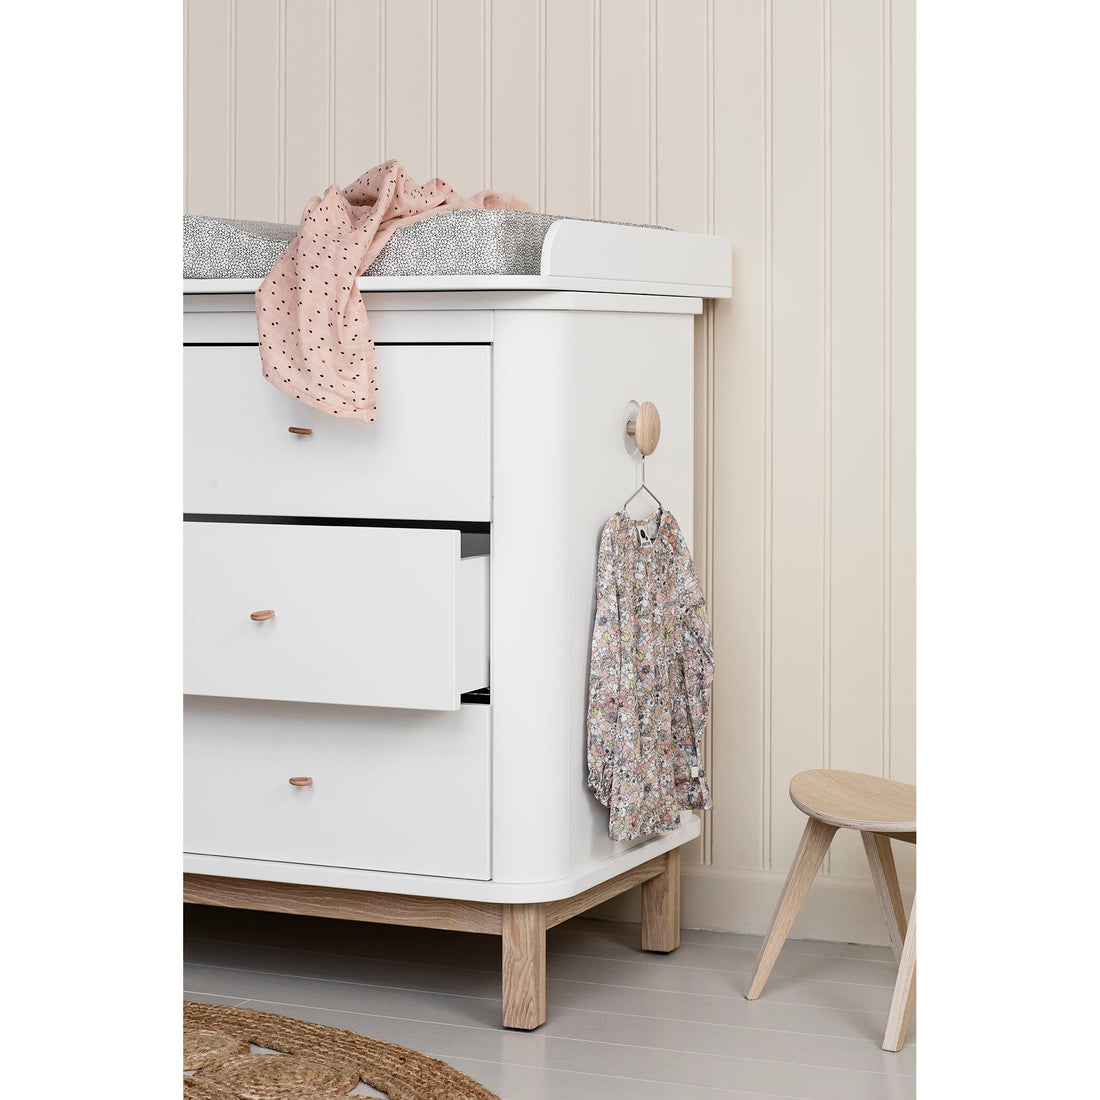 oliver-furniture-wood-dresser-6-drawers-white- (13)